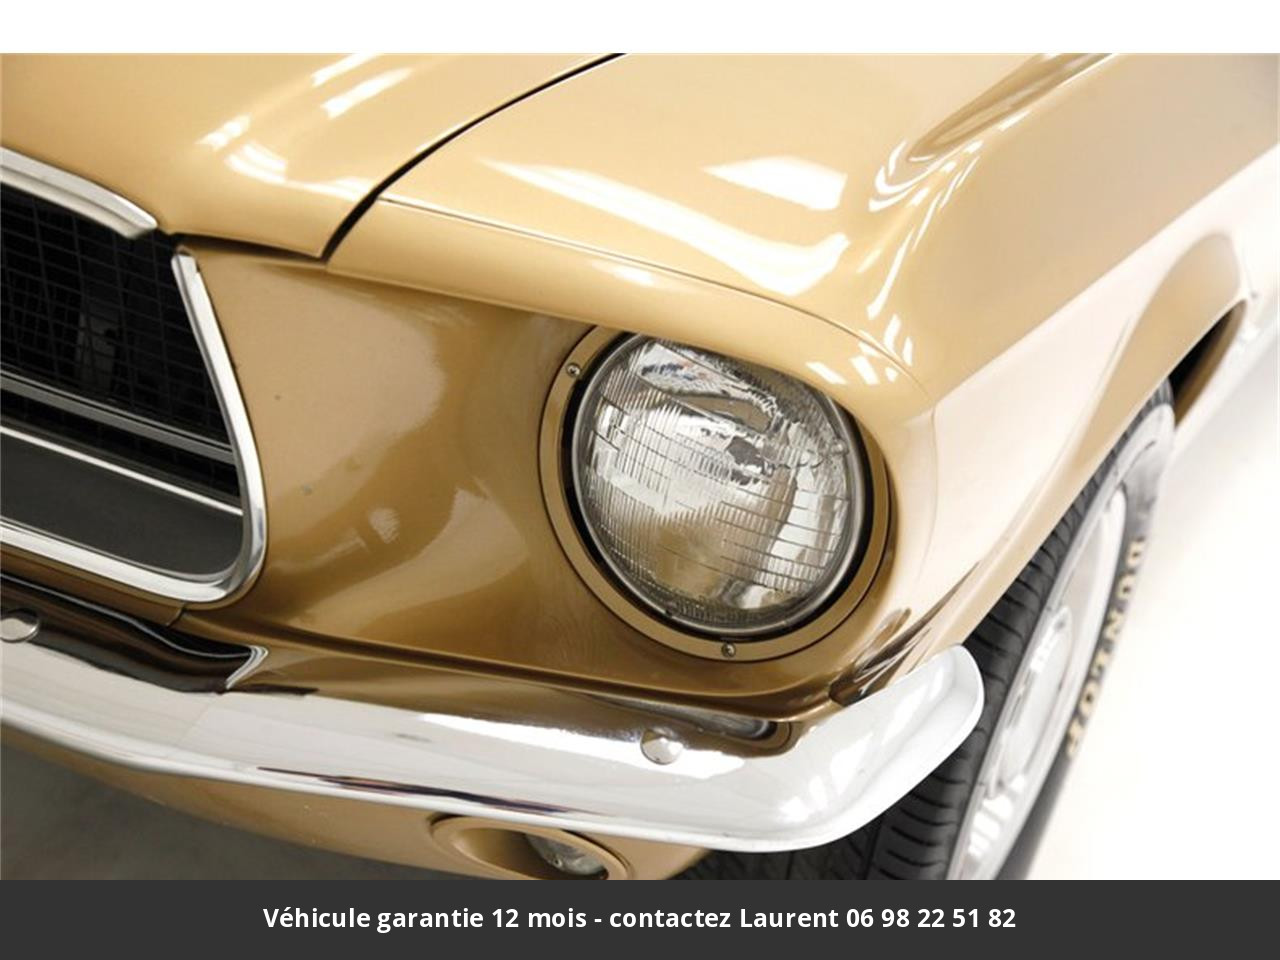 Ford Mustang 289ci v8  1968 prix tout compris